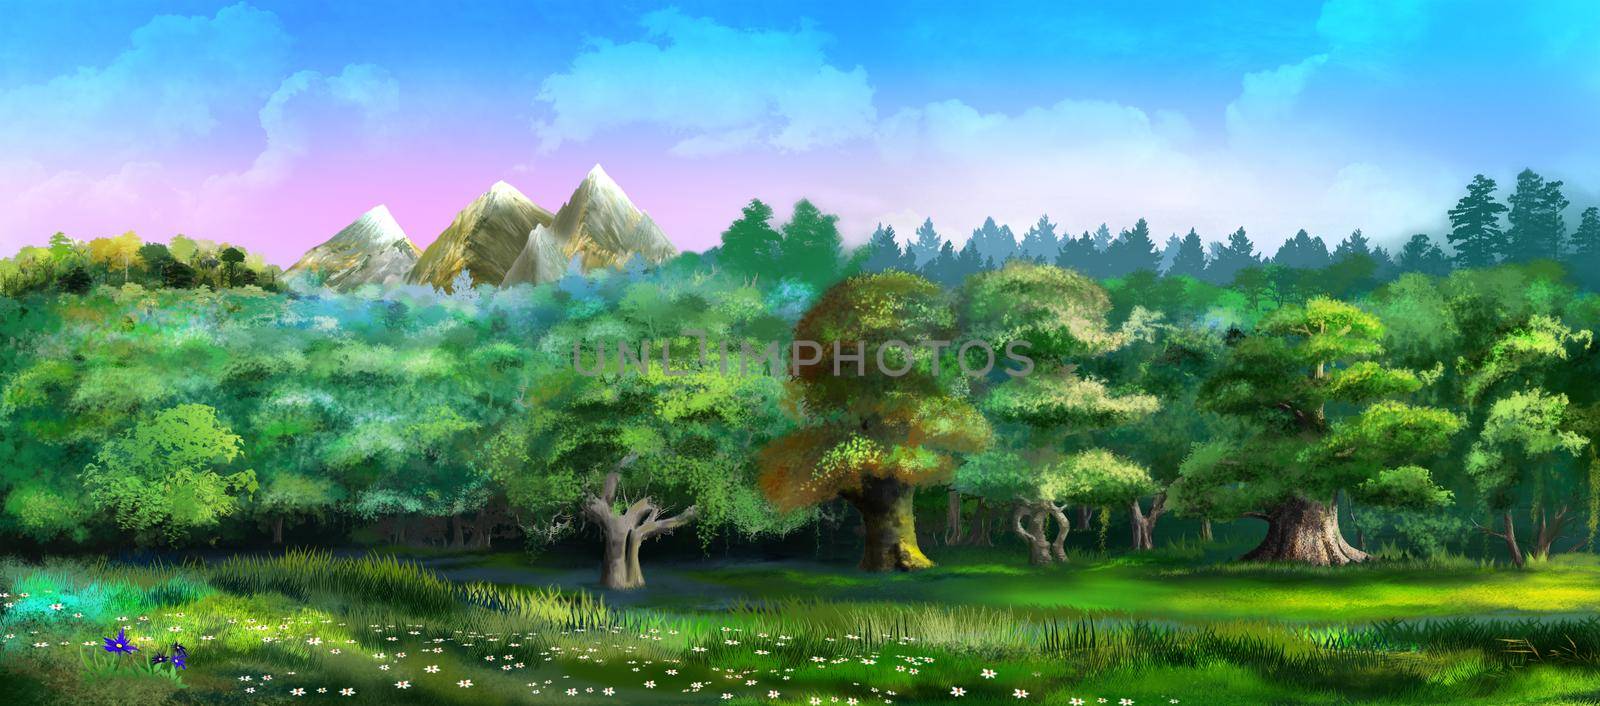 Deciduous forest landscape illustration by Multipedia